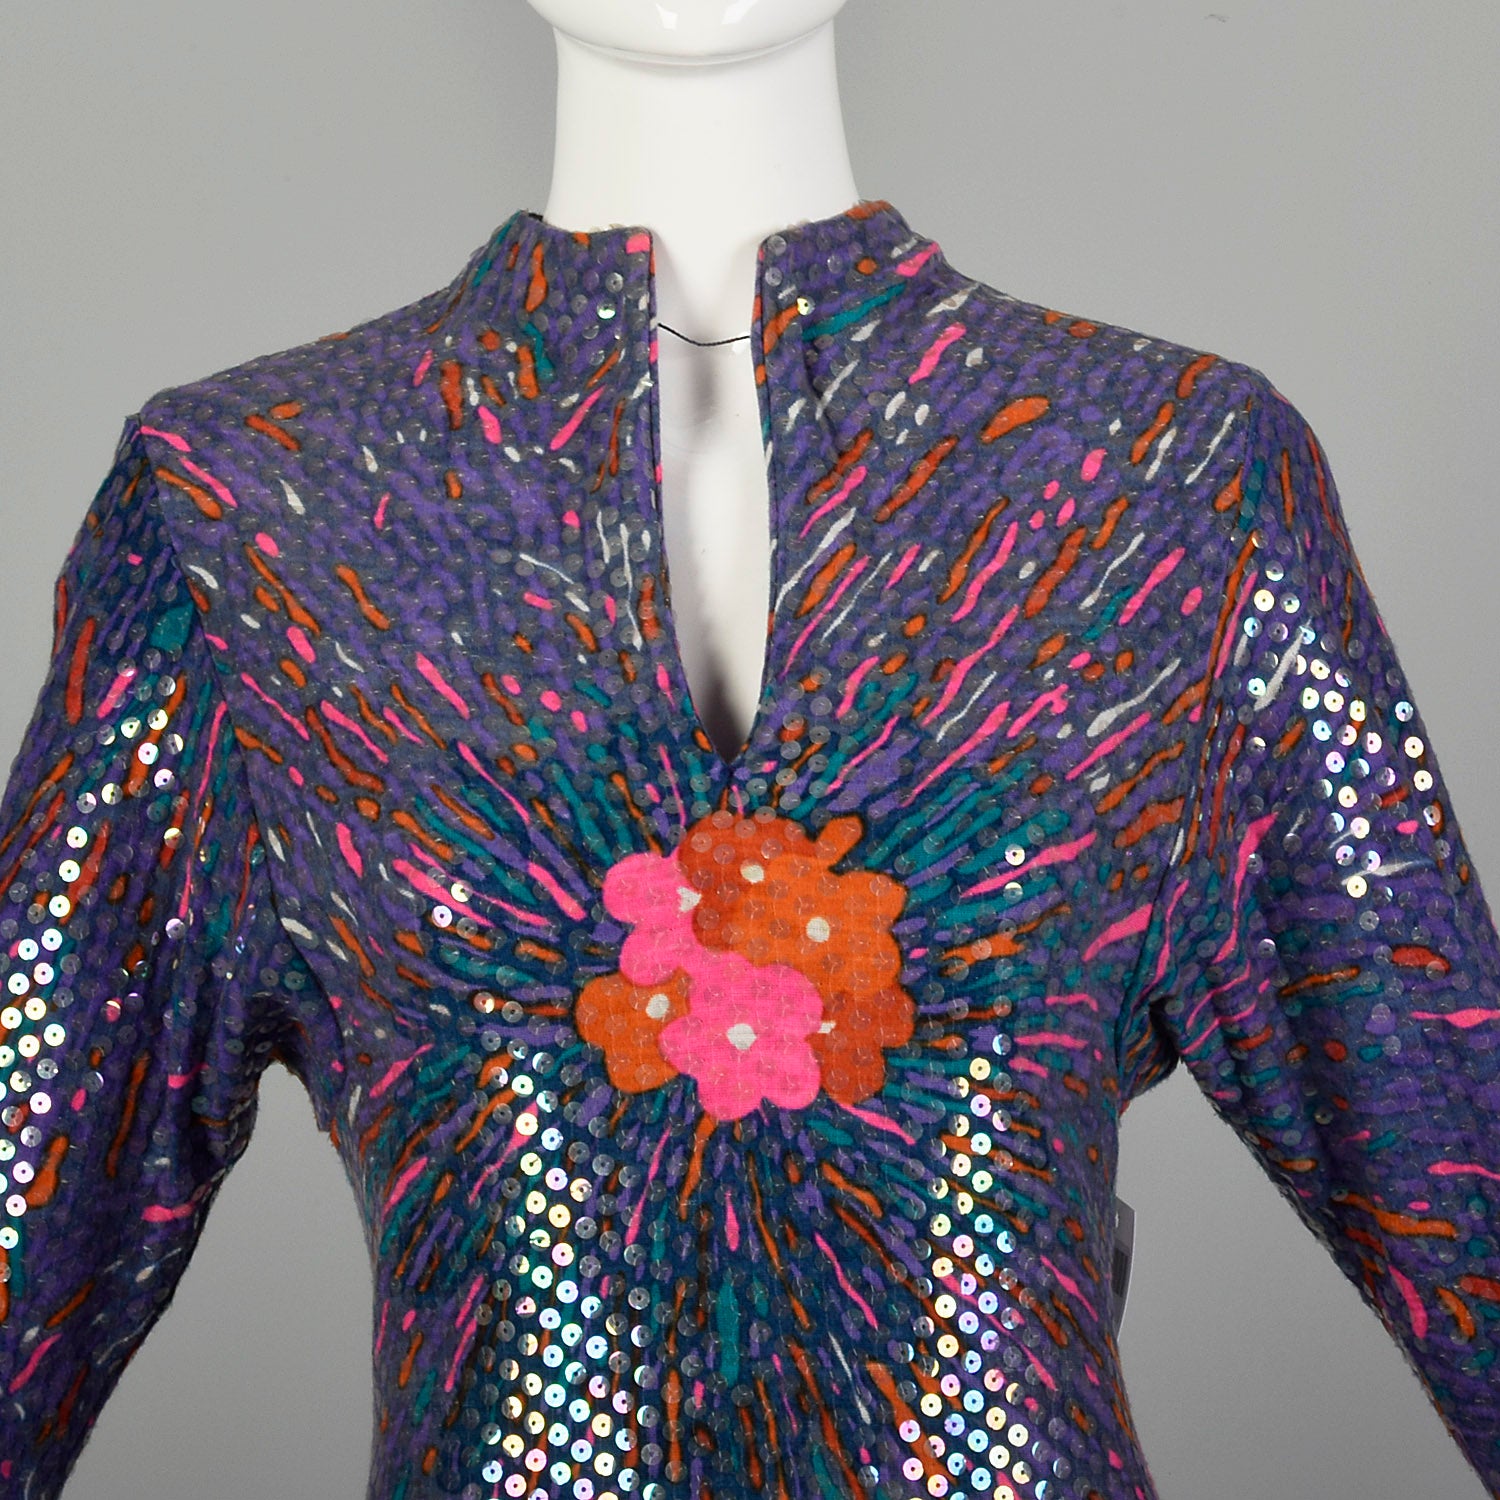 Small 1970s Malcom Starr Purple Evening Gown Purple Sequin Maxi Dress